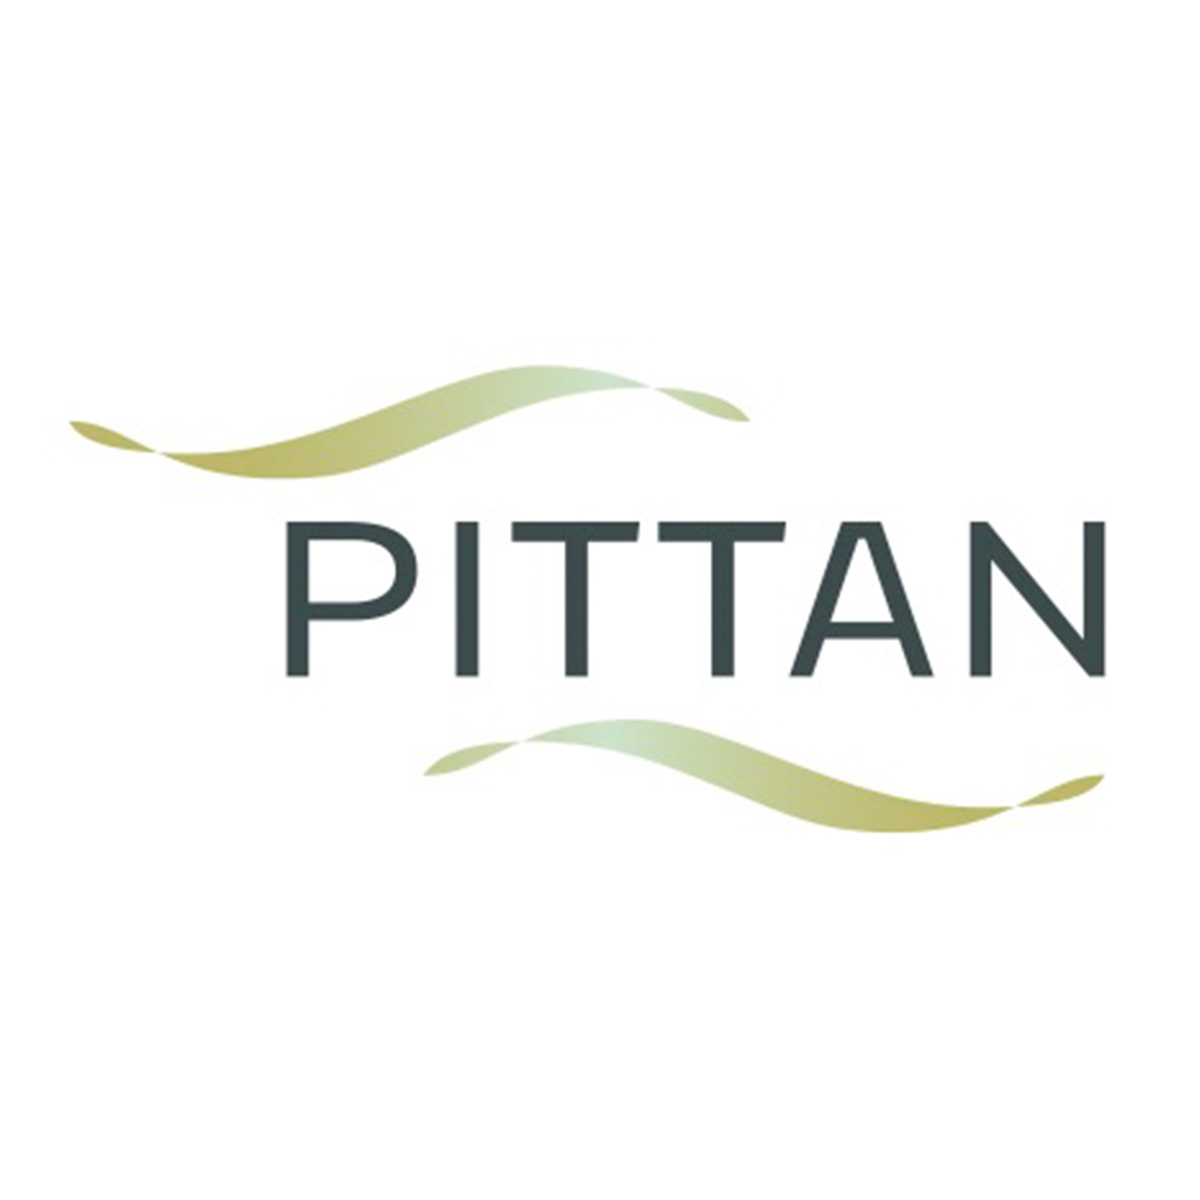 PITTAN | 汗によるスキンチェック